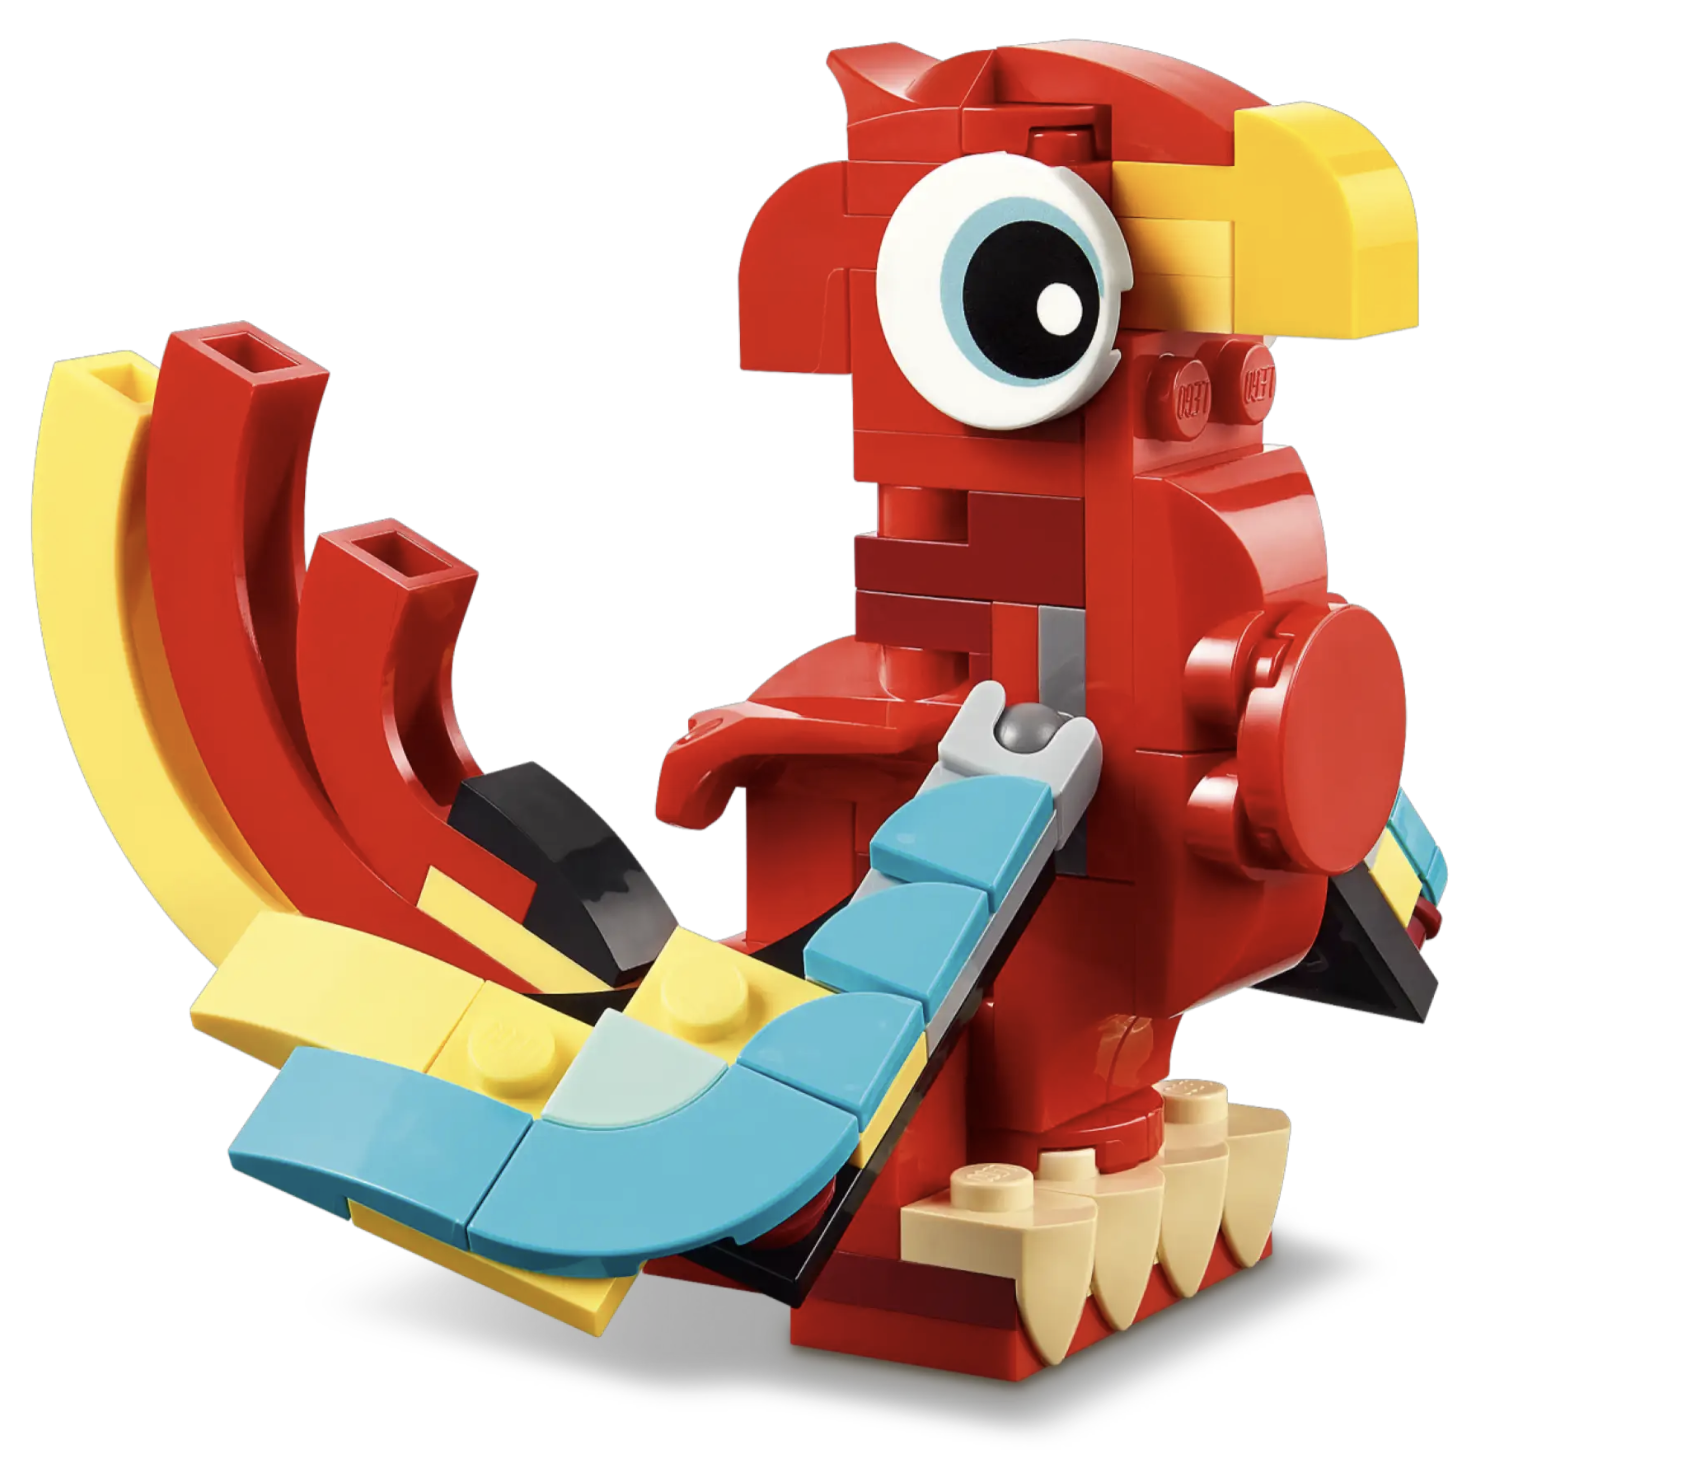 LEGO® 31145 Drago rosso LEGO® Creator 3in1 - VELIS Spielwaren GmbH